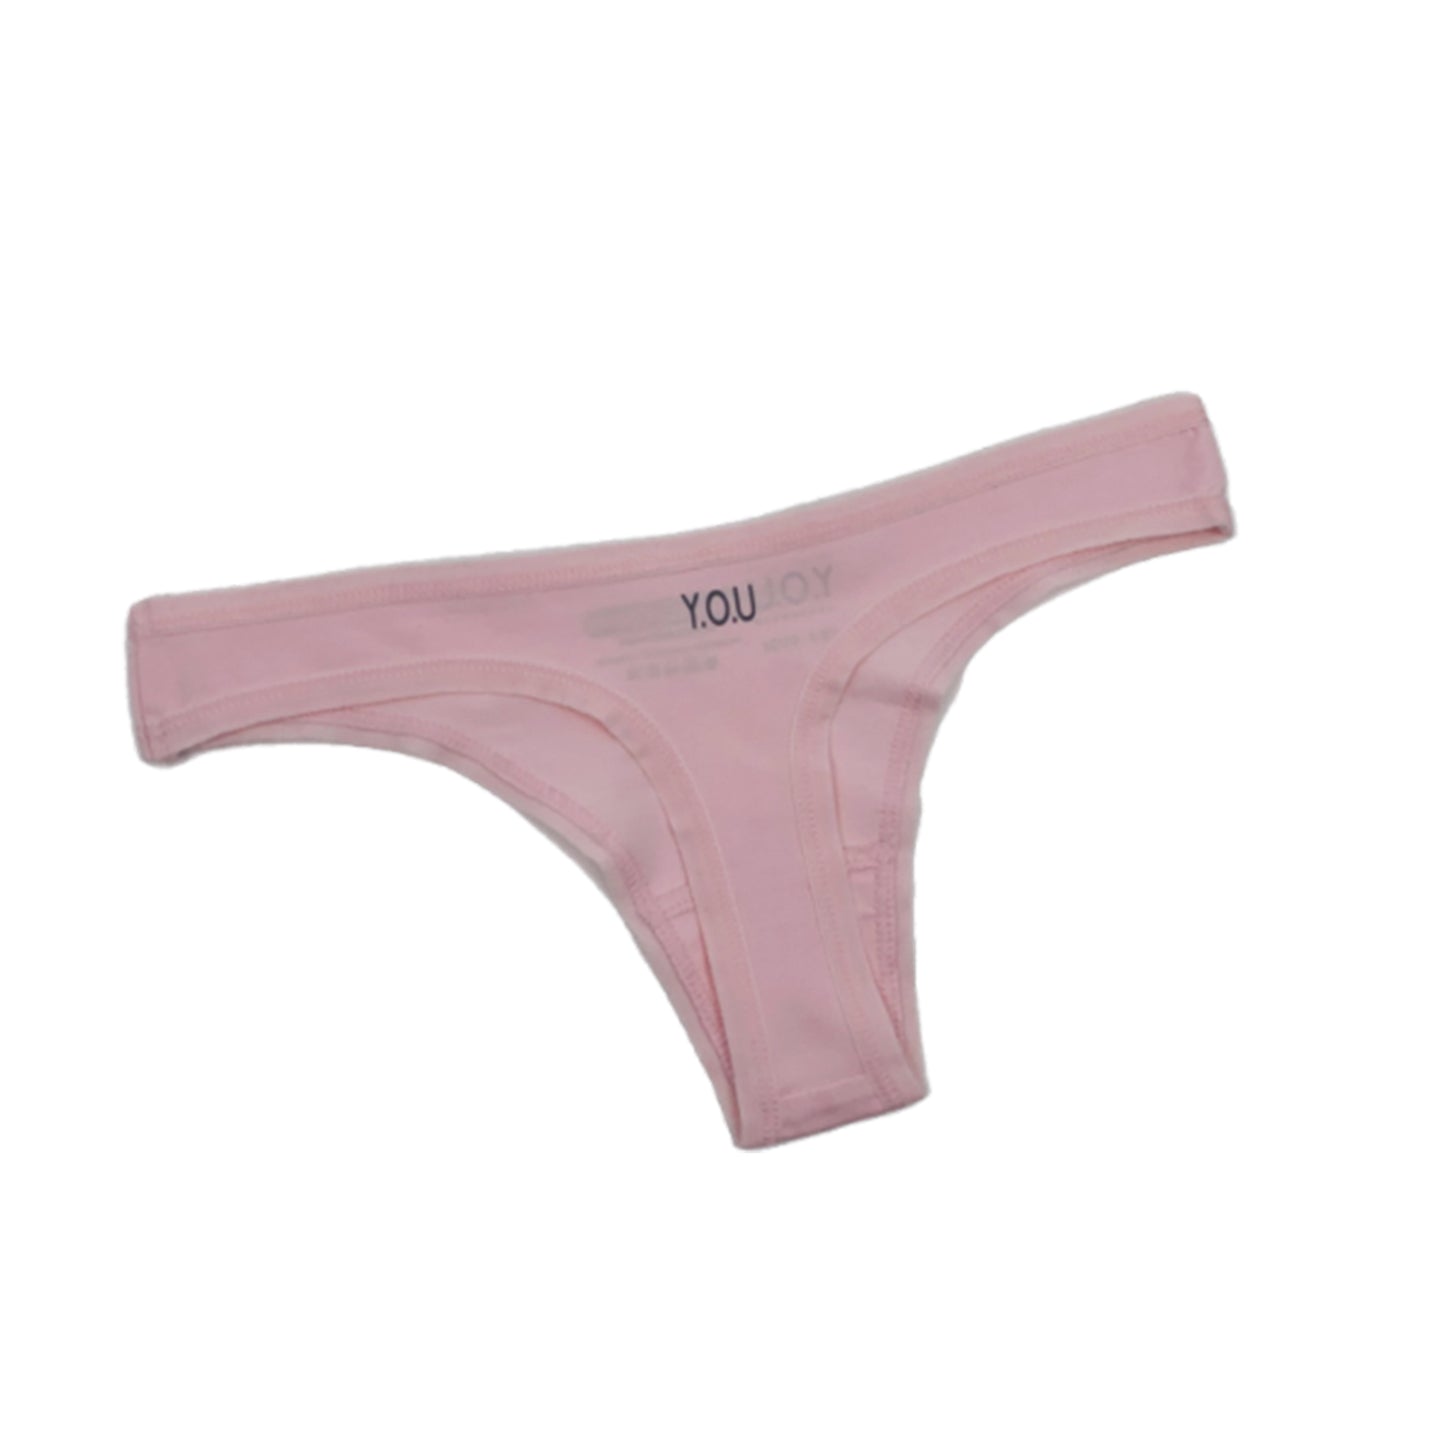 Women's organic cotton thong in light pink